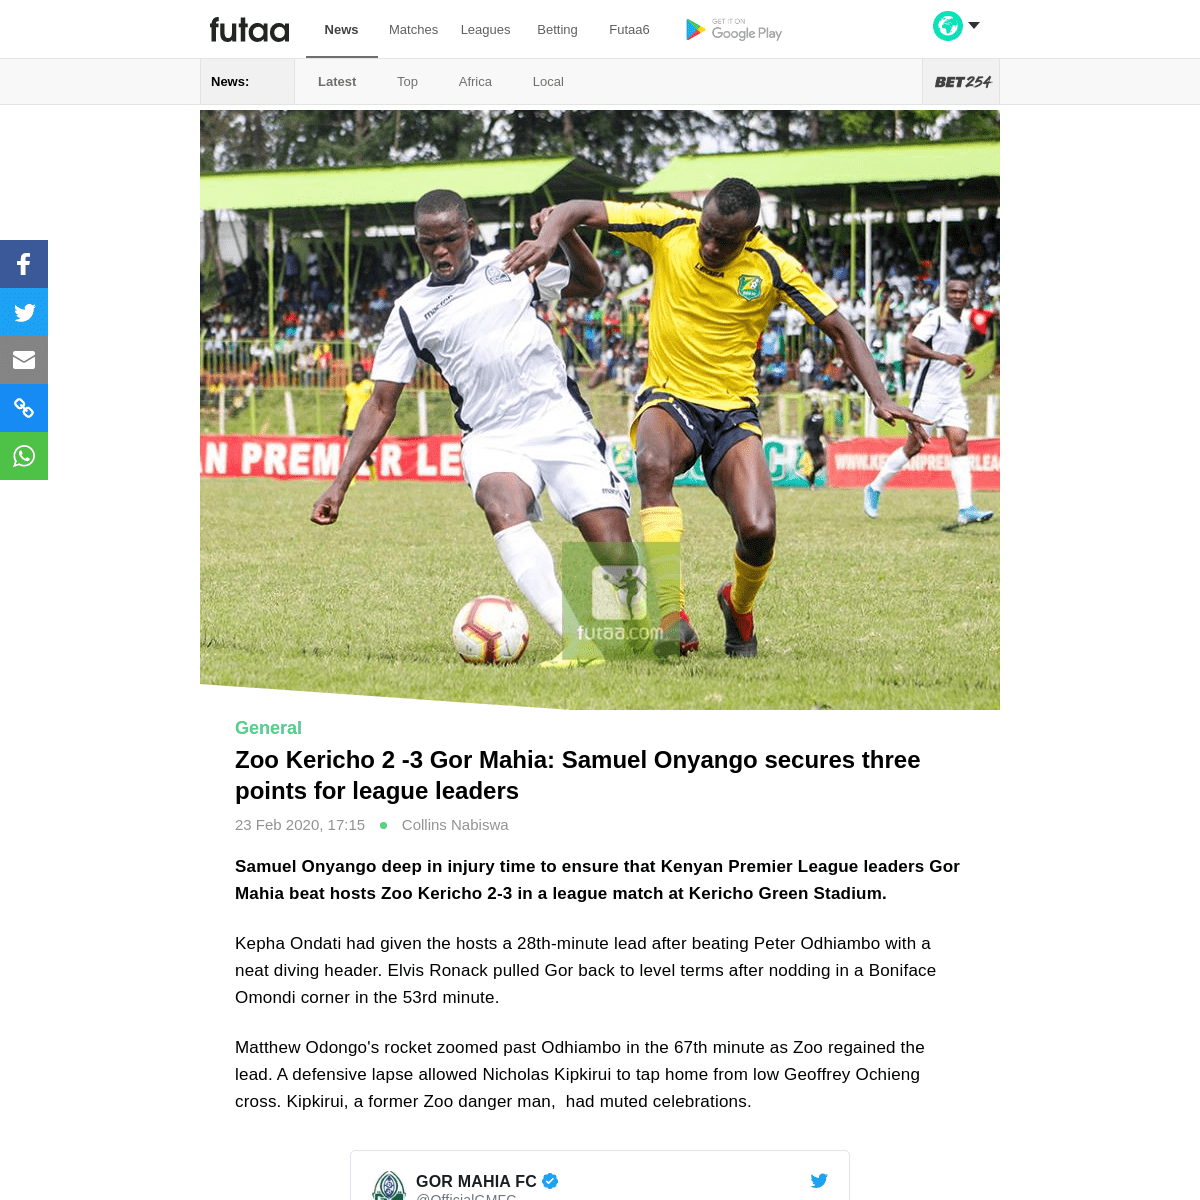 A complete backup of futaa.com/article/202957/zoo-kericho-2-3-gor-mahia-samuel-onyango-secures-three-points-for-league-leaders